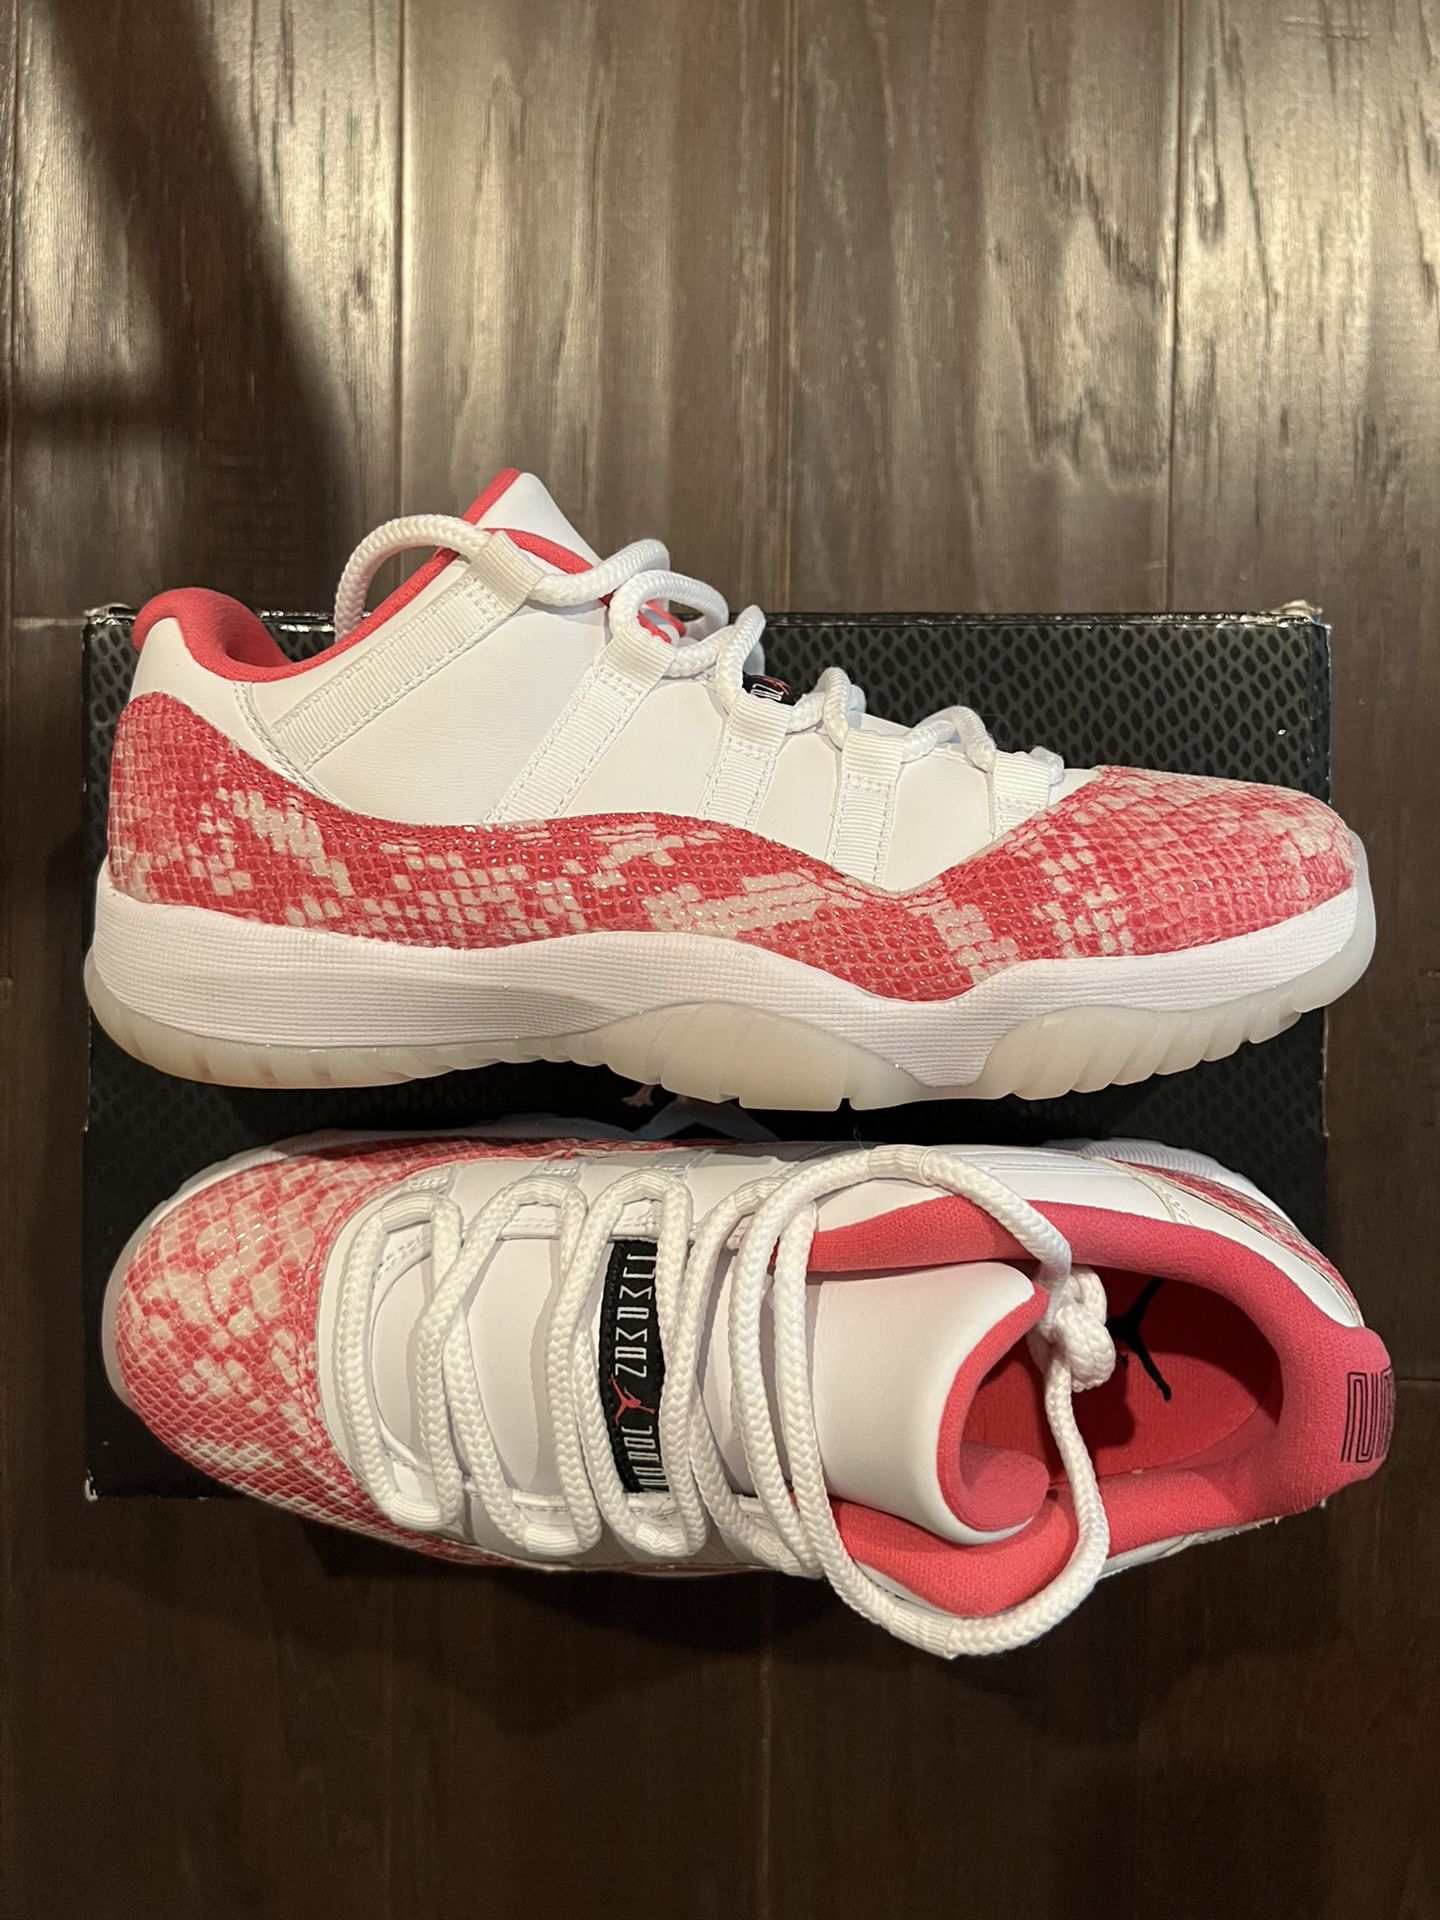 Air Jordan 11 Low Pink Snakeskin Size 9W